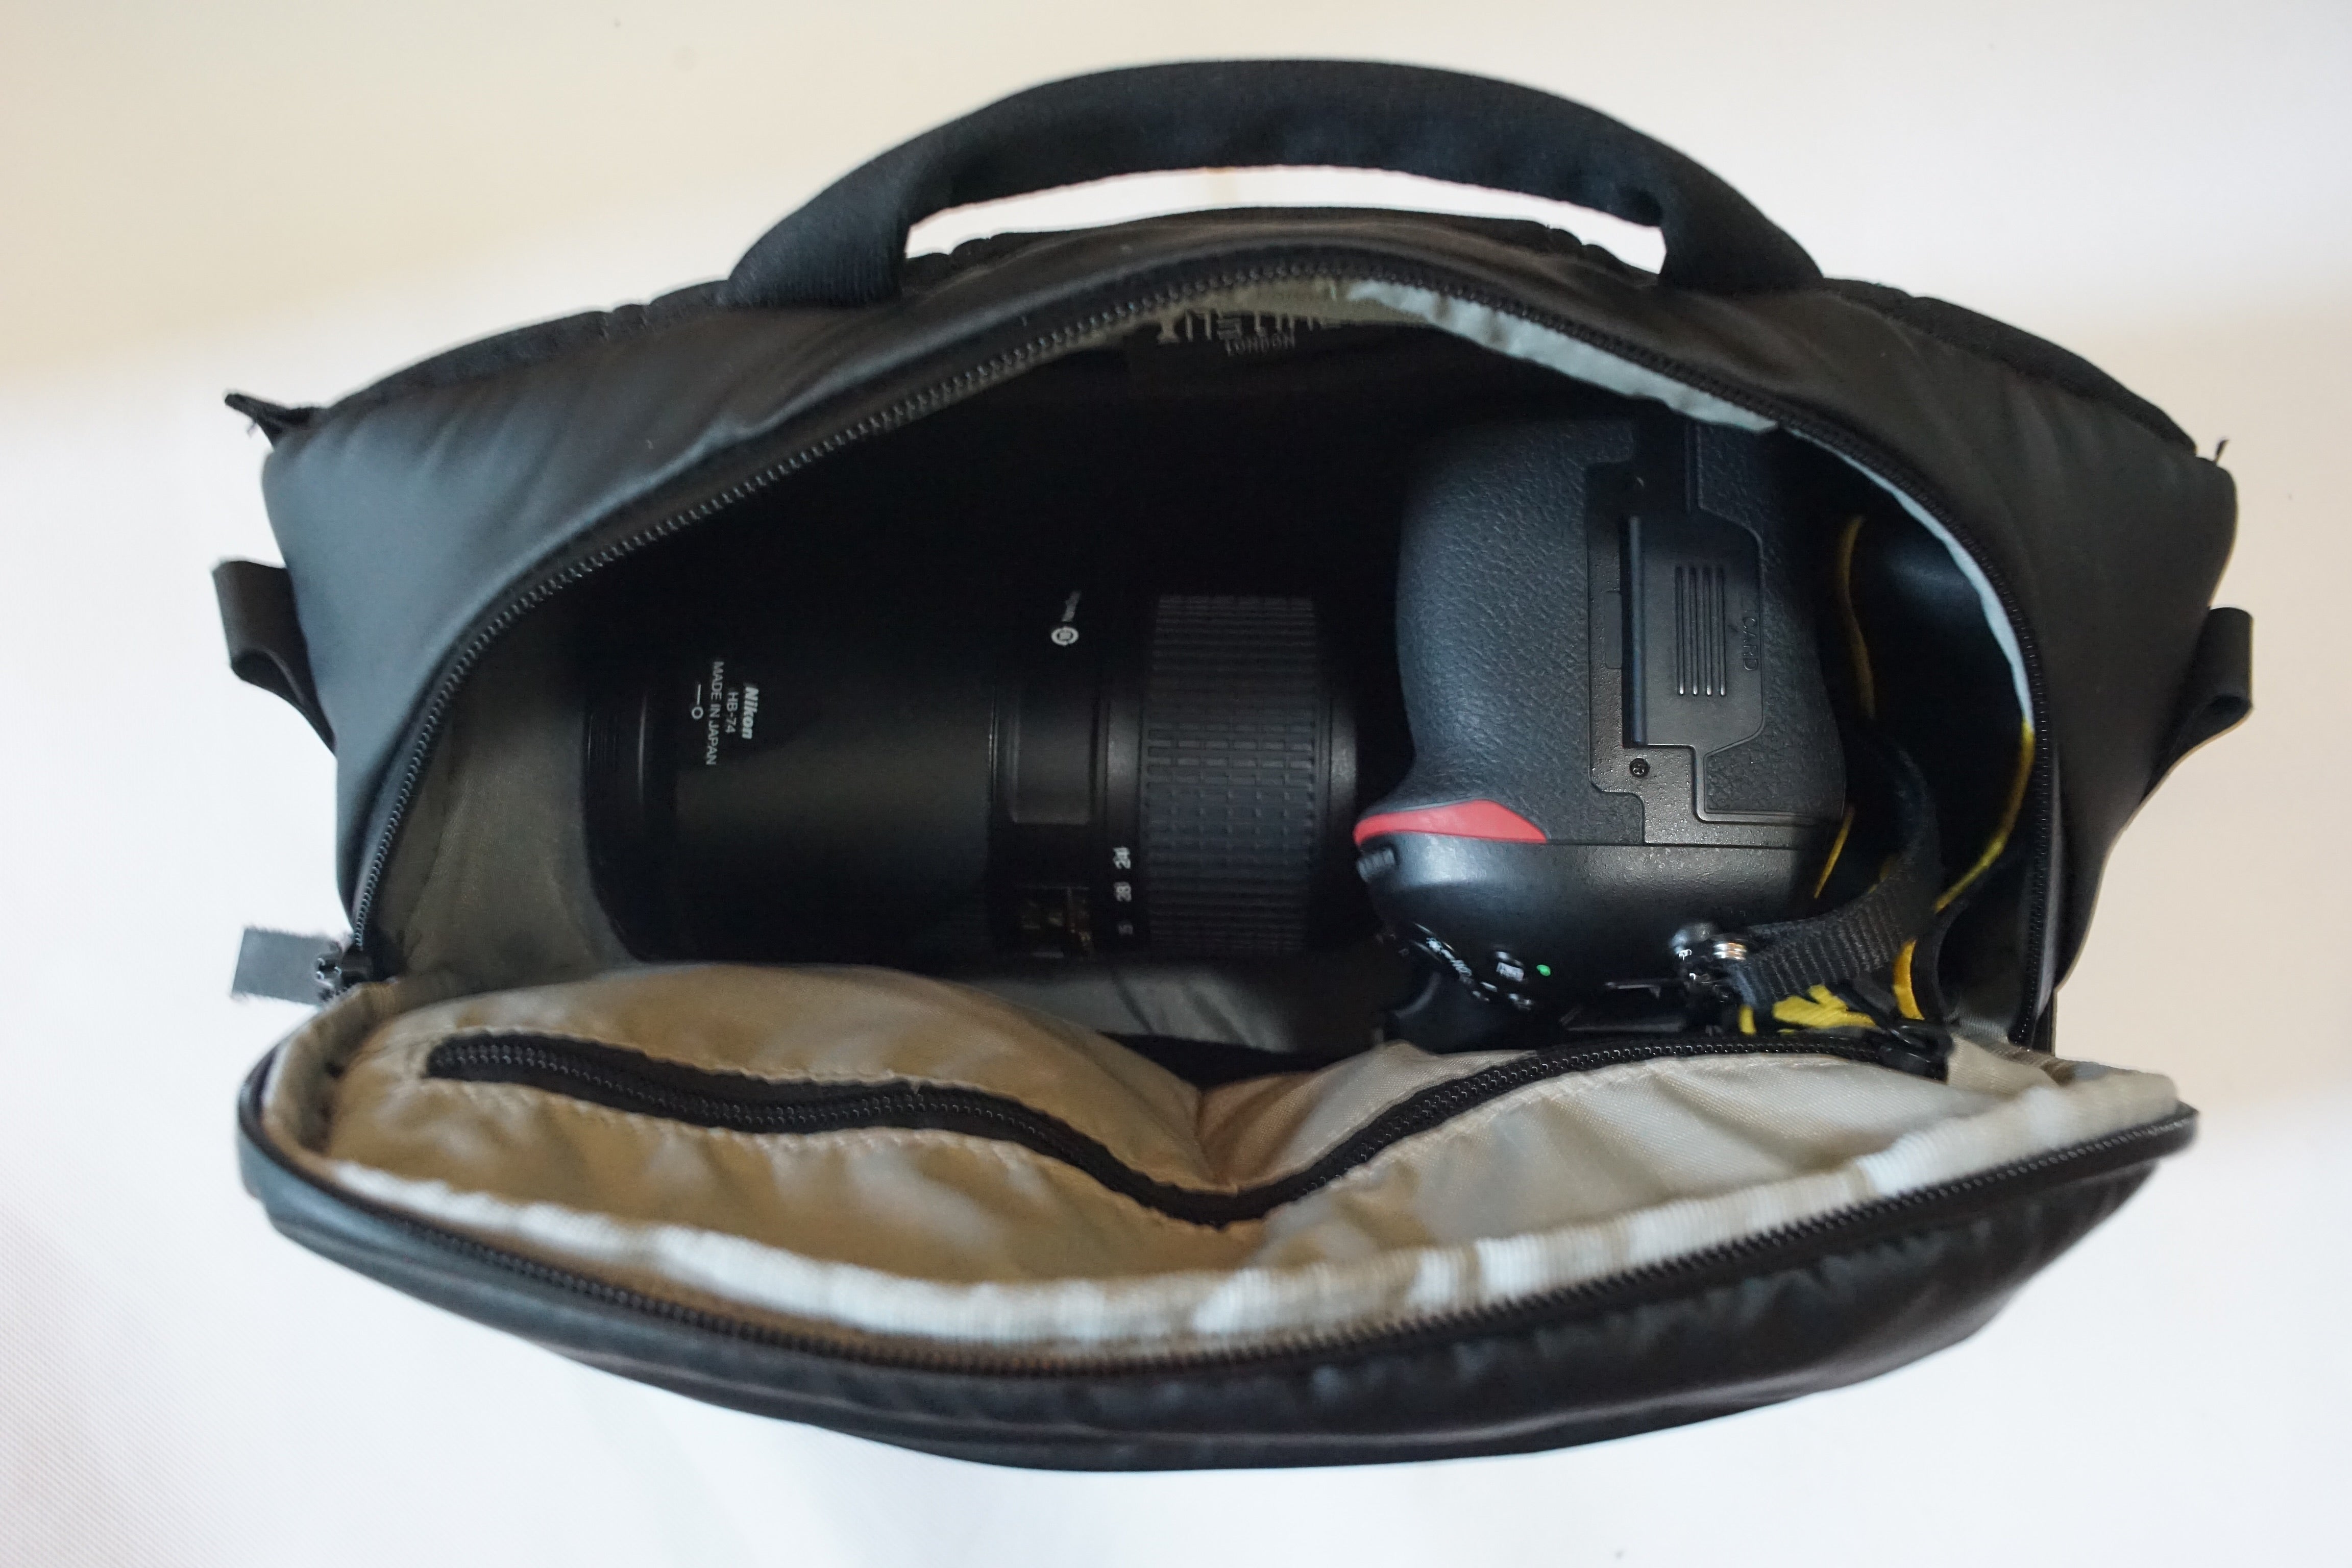 Nikon camera with lens inside black camera sling bag with grey lining